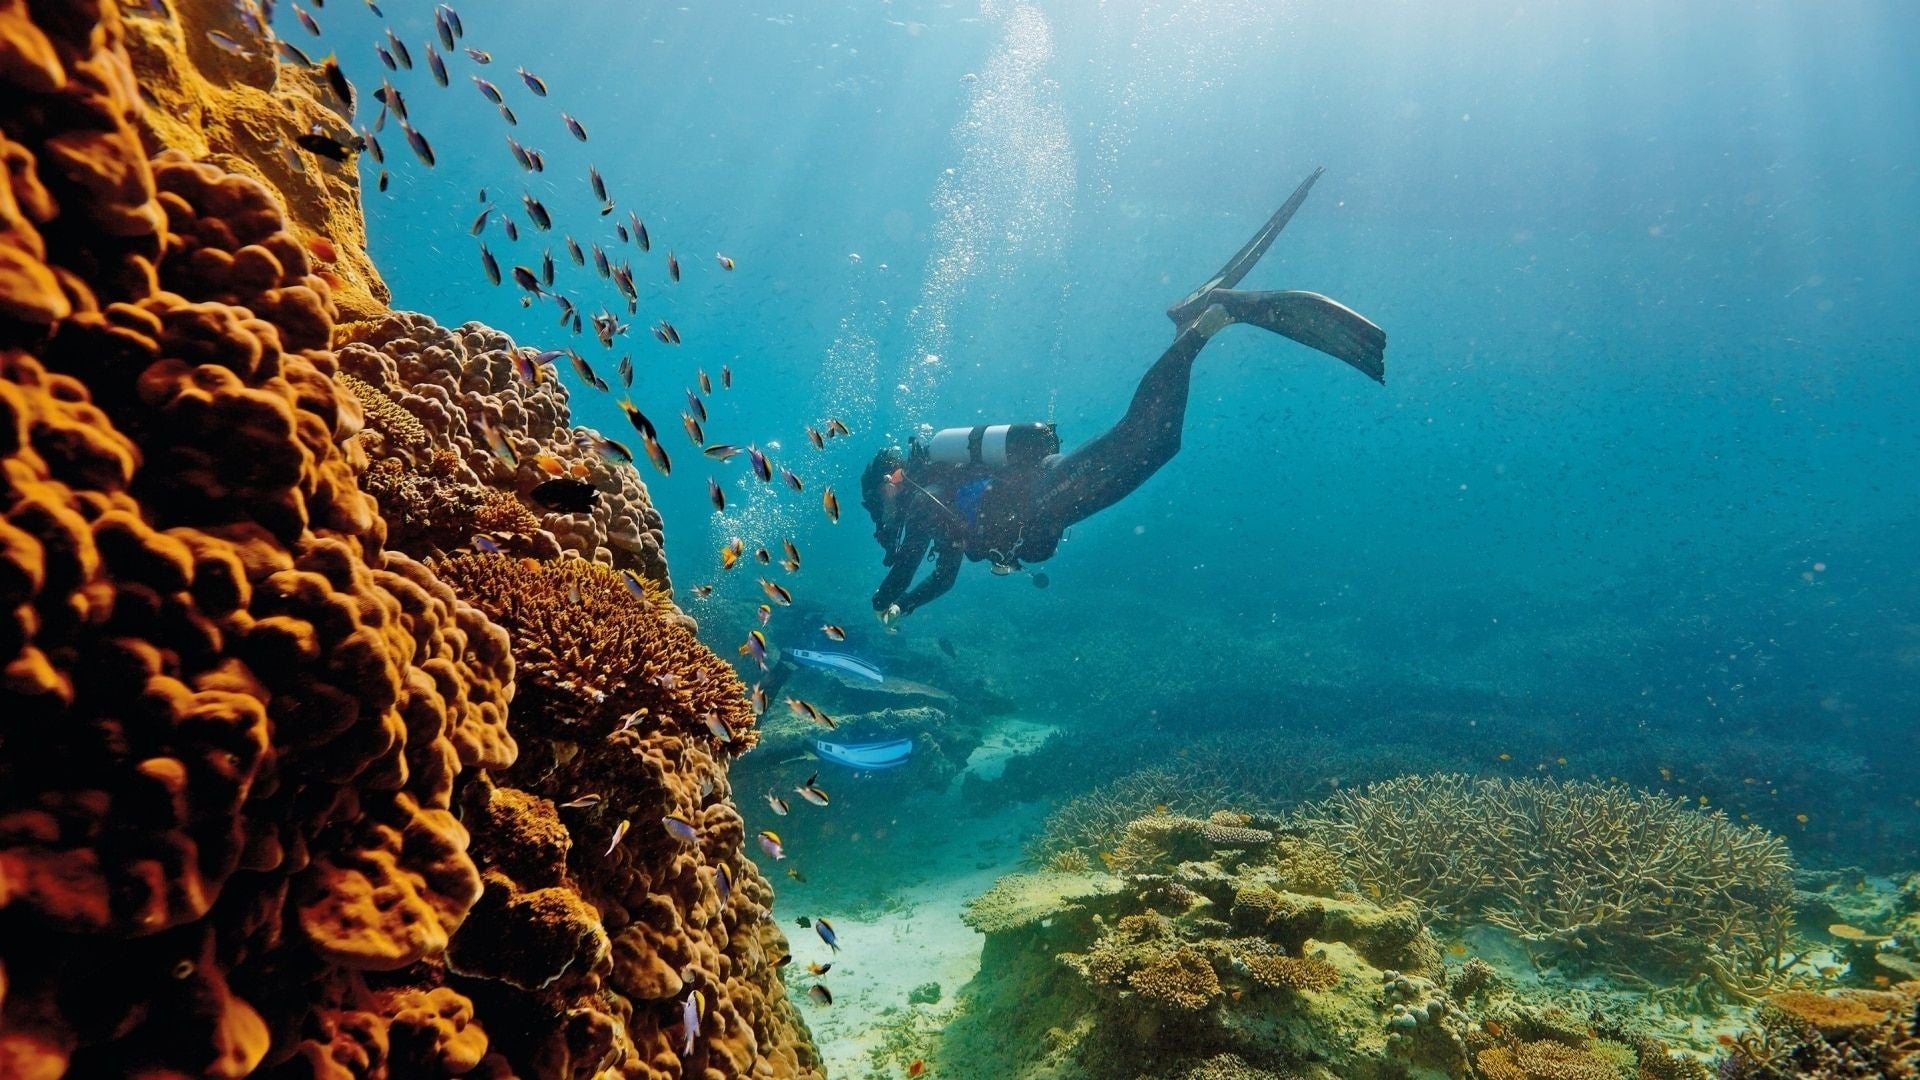 Scuba diving in the Great Barrier Reef in Australia